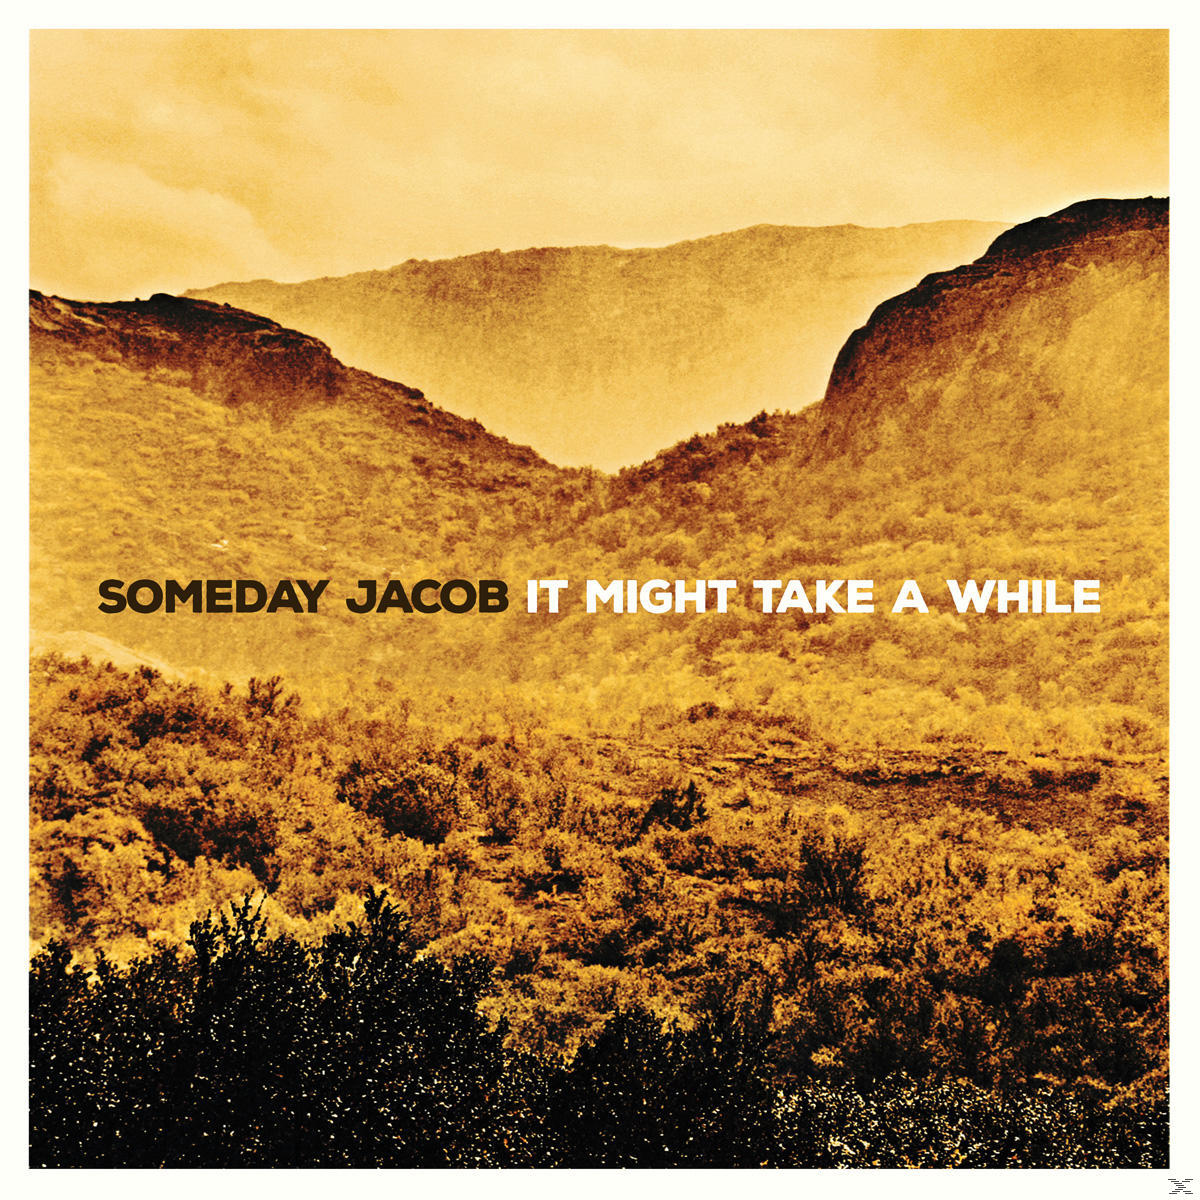 Take Might + - Download) Someday (LP It Jacob - A While (Lp+Mp3)